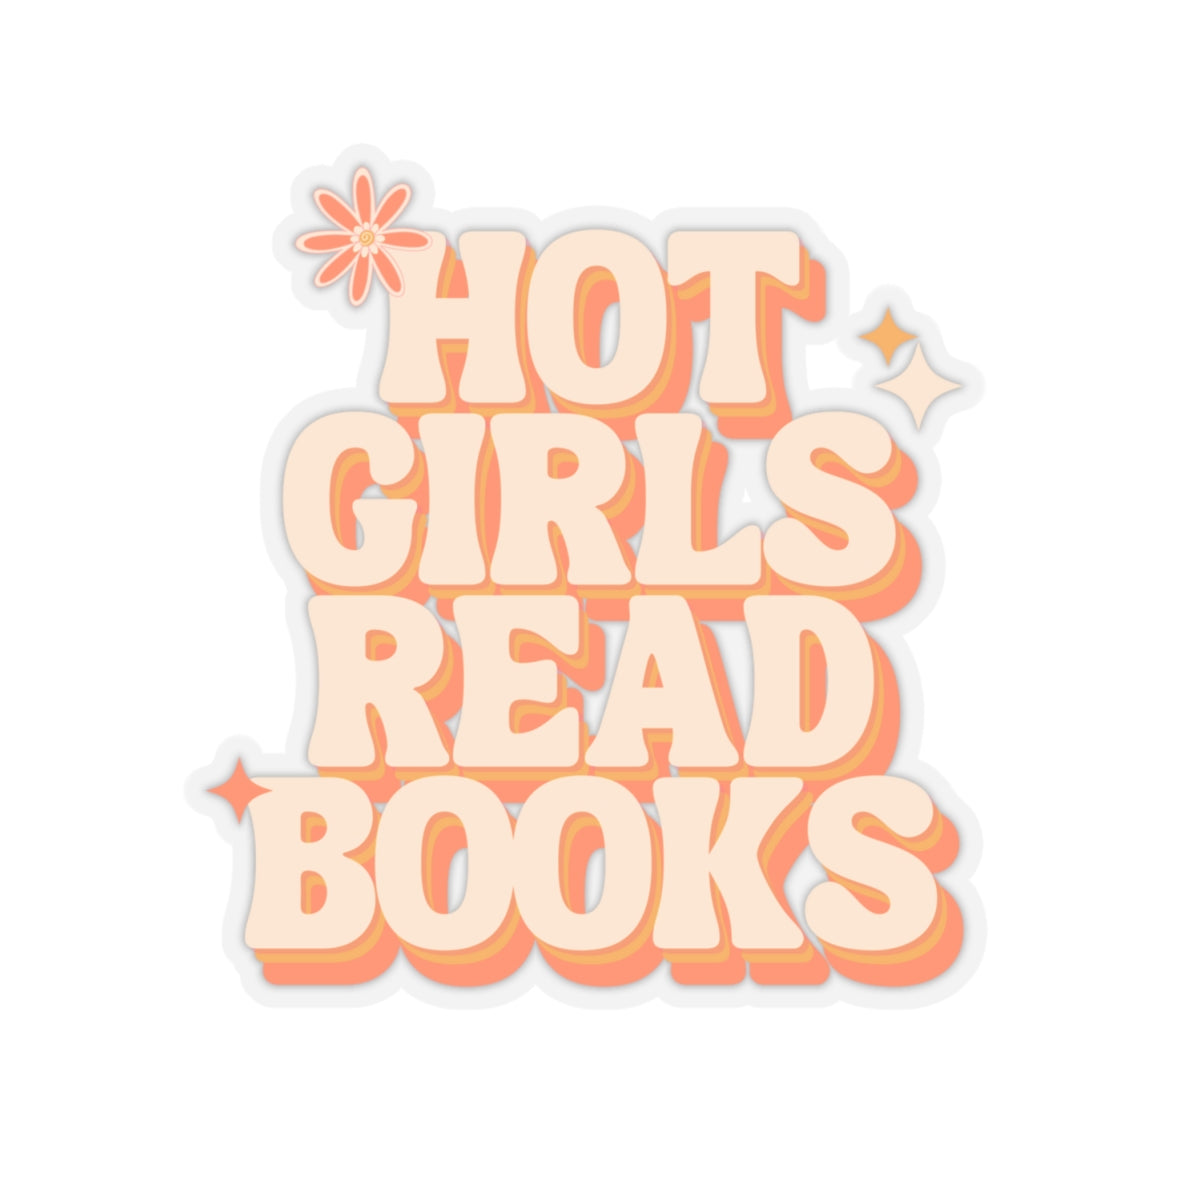 Hot Girls Read Books - Stickers